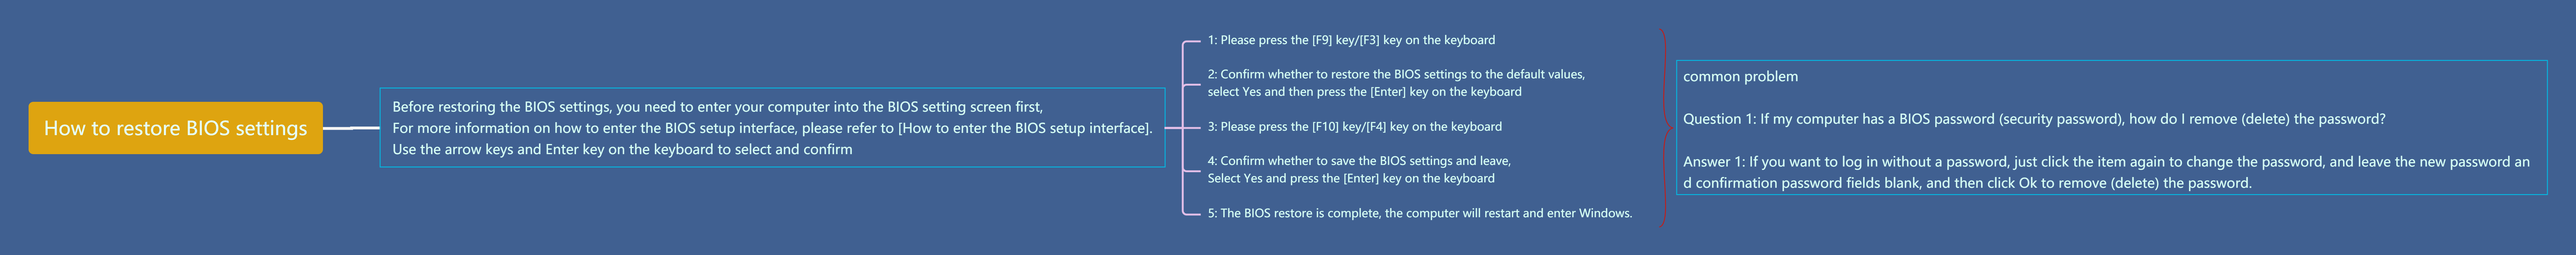 How to restore BIOS settings.png